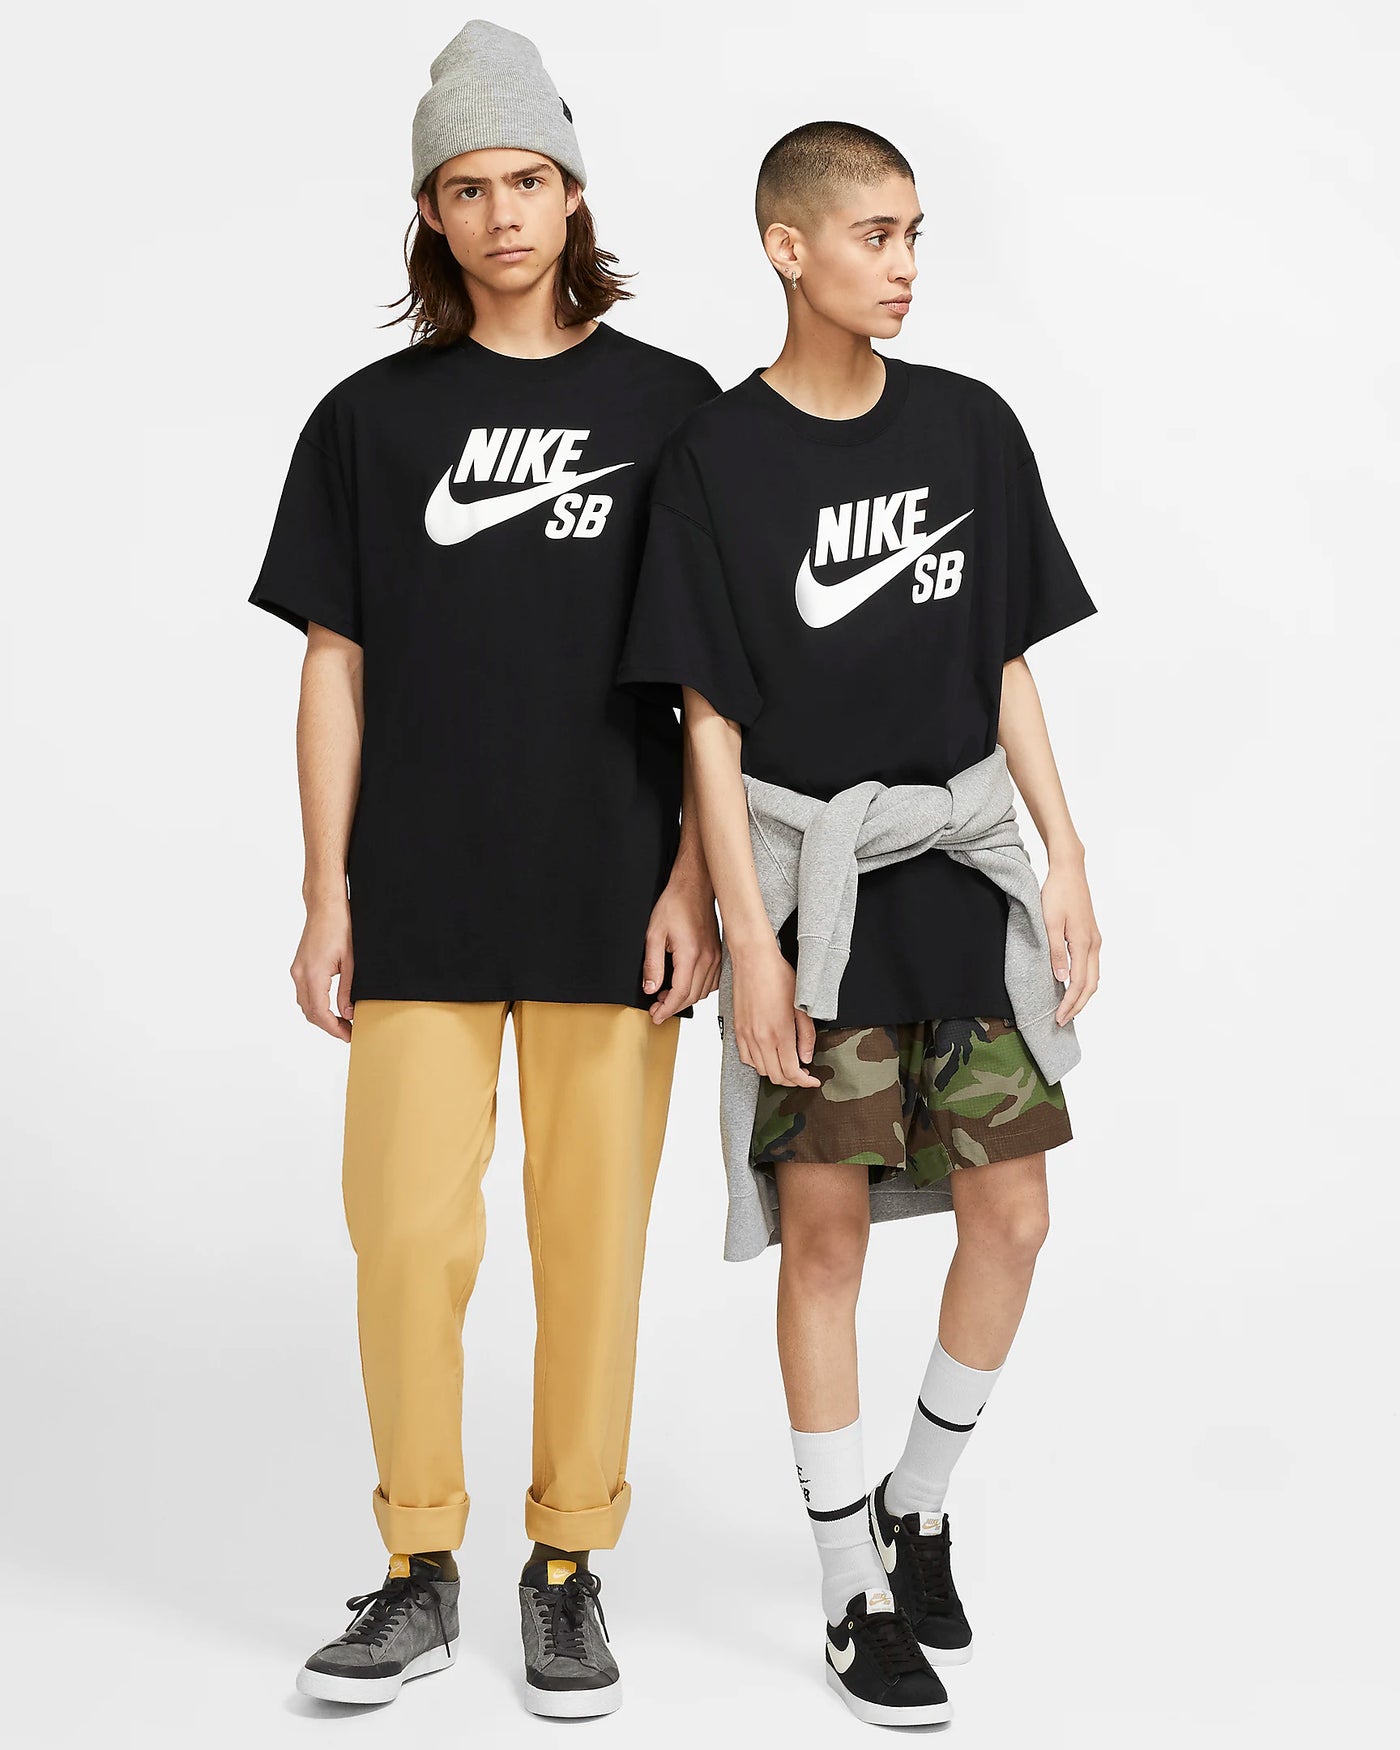 Nike 7539 10 T-Shirt - Black